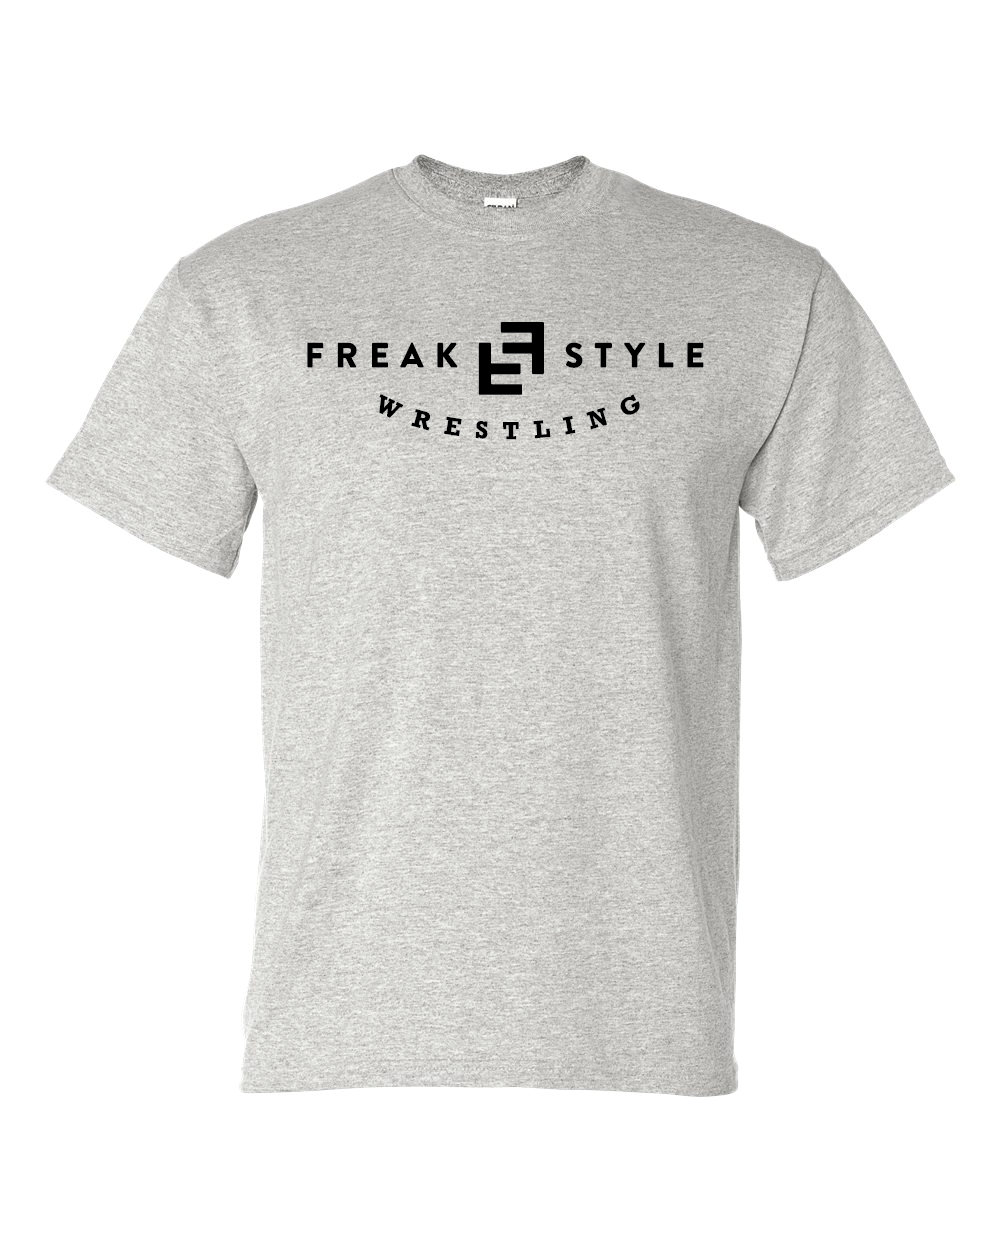 Freakstyle Logo (Old School Short Sleeve and Long Sleeve)